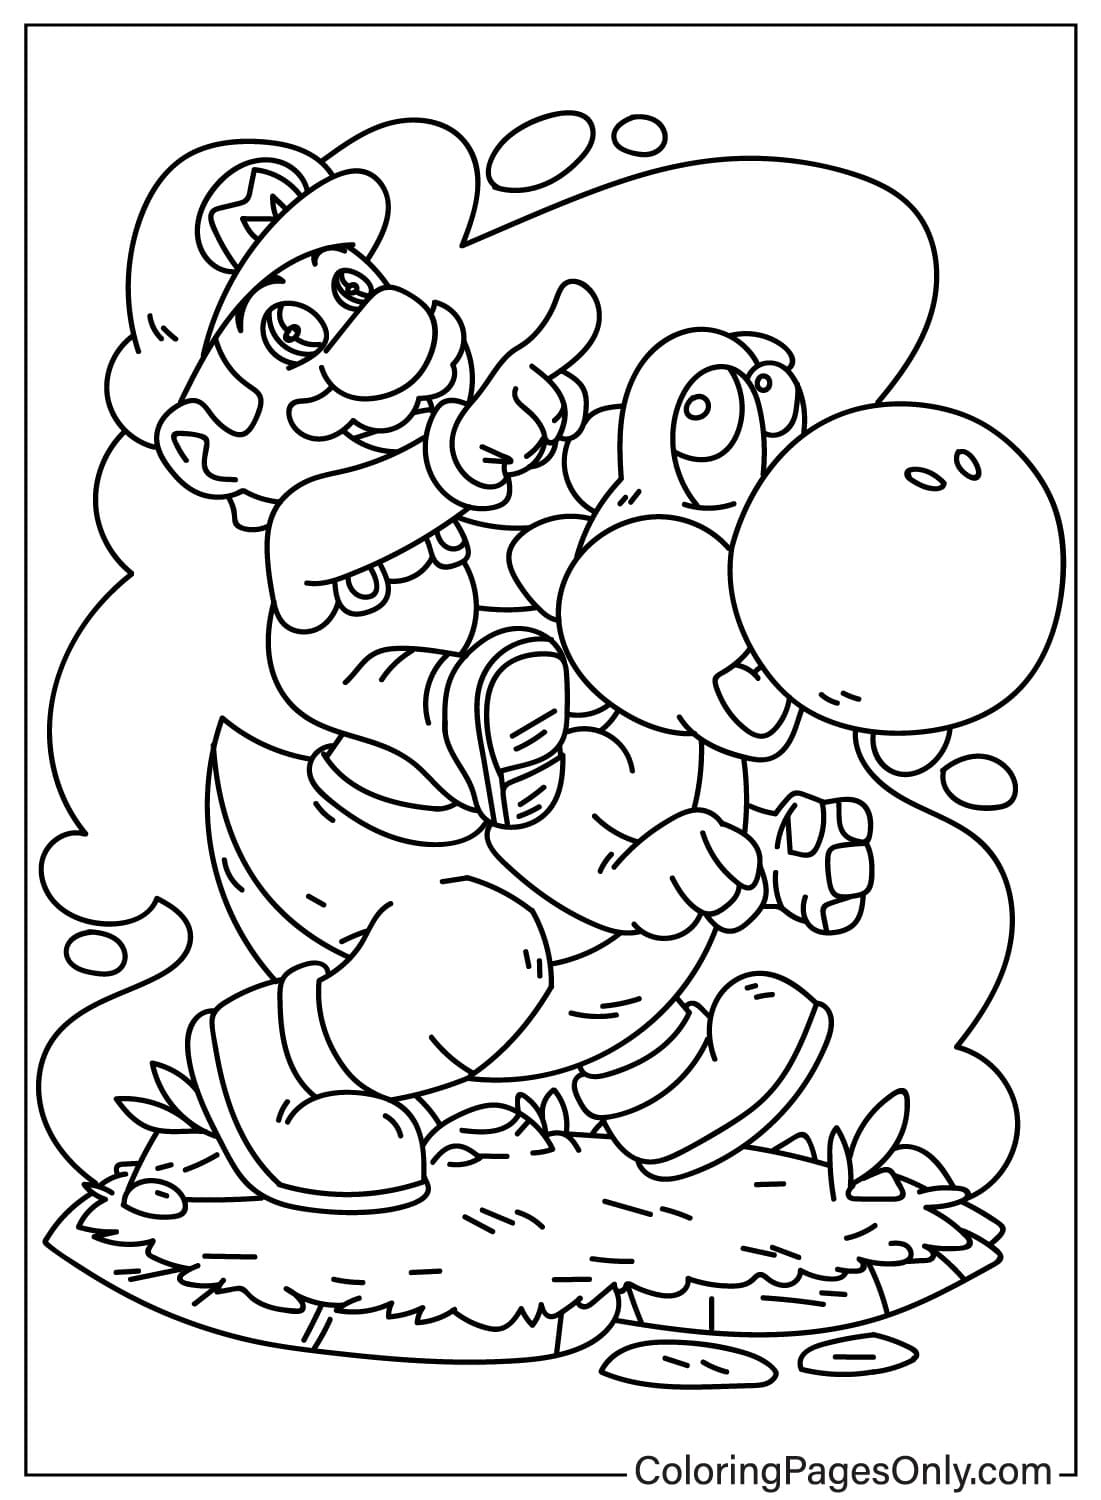 Mario and Yoshi Coloring Page